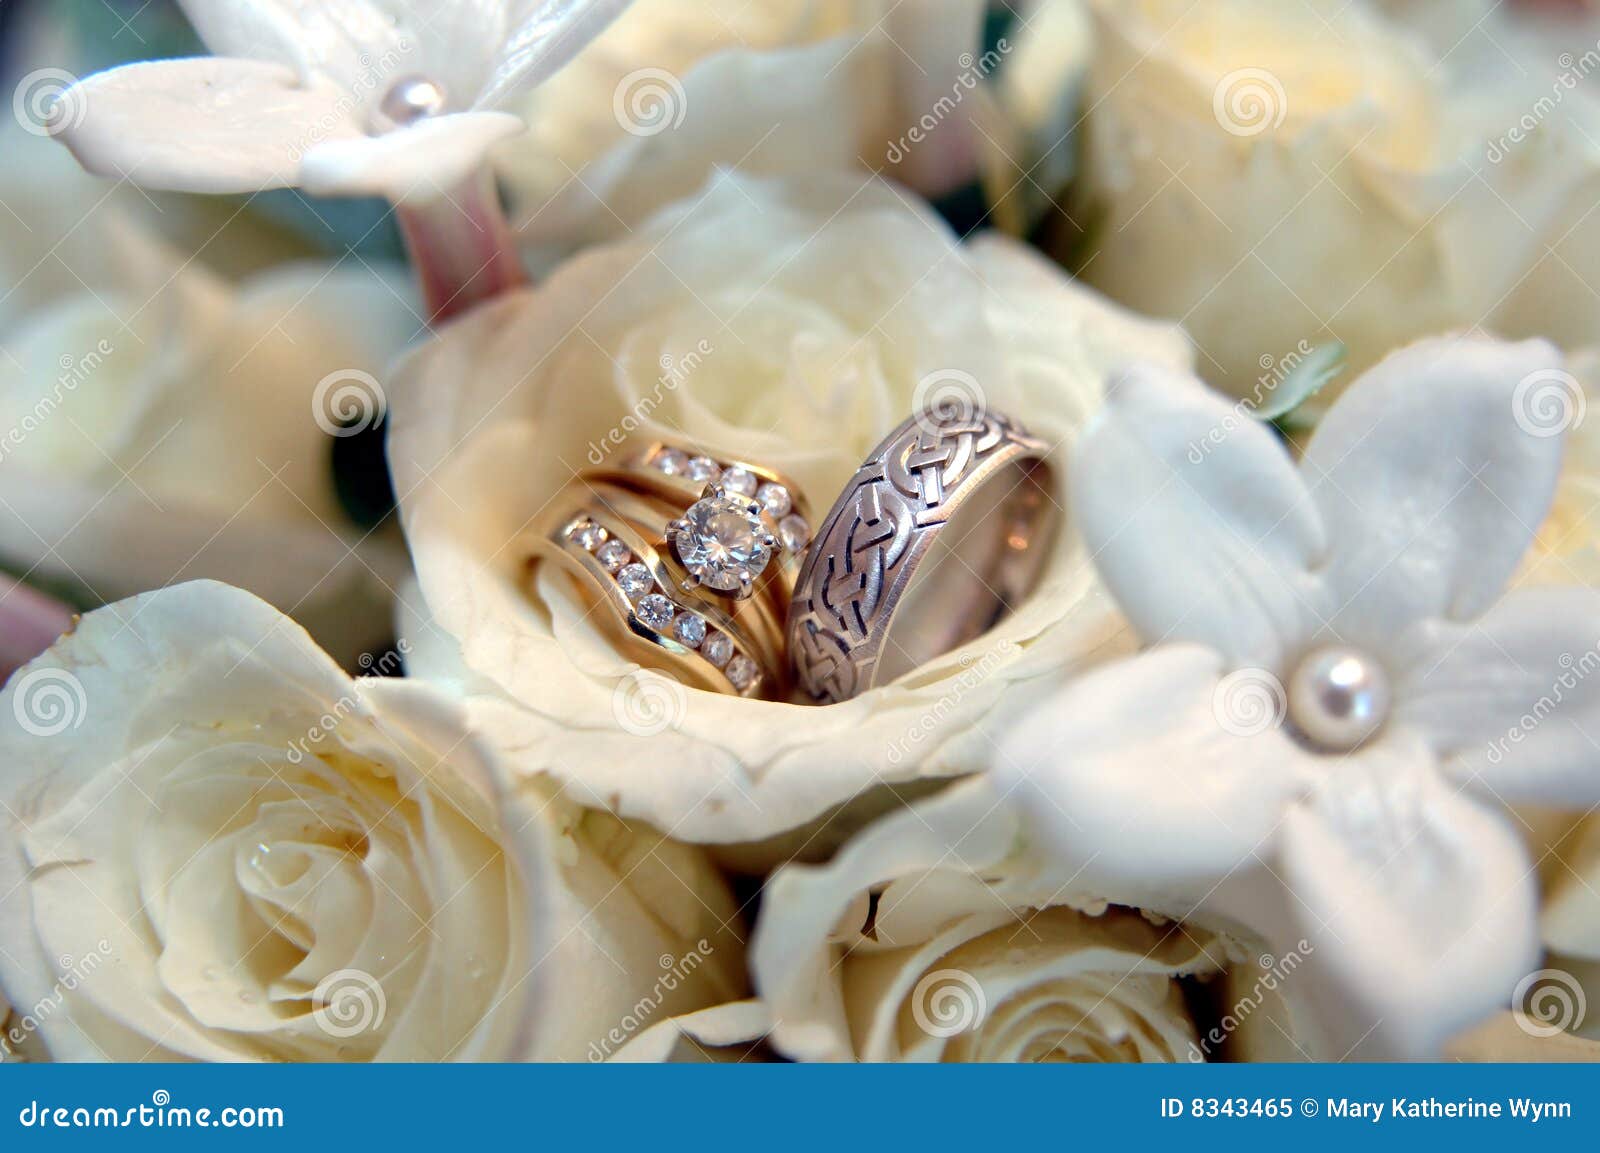 Bouquet wedding rings